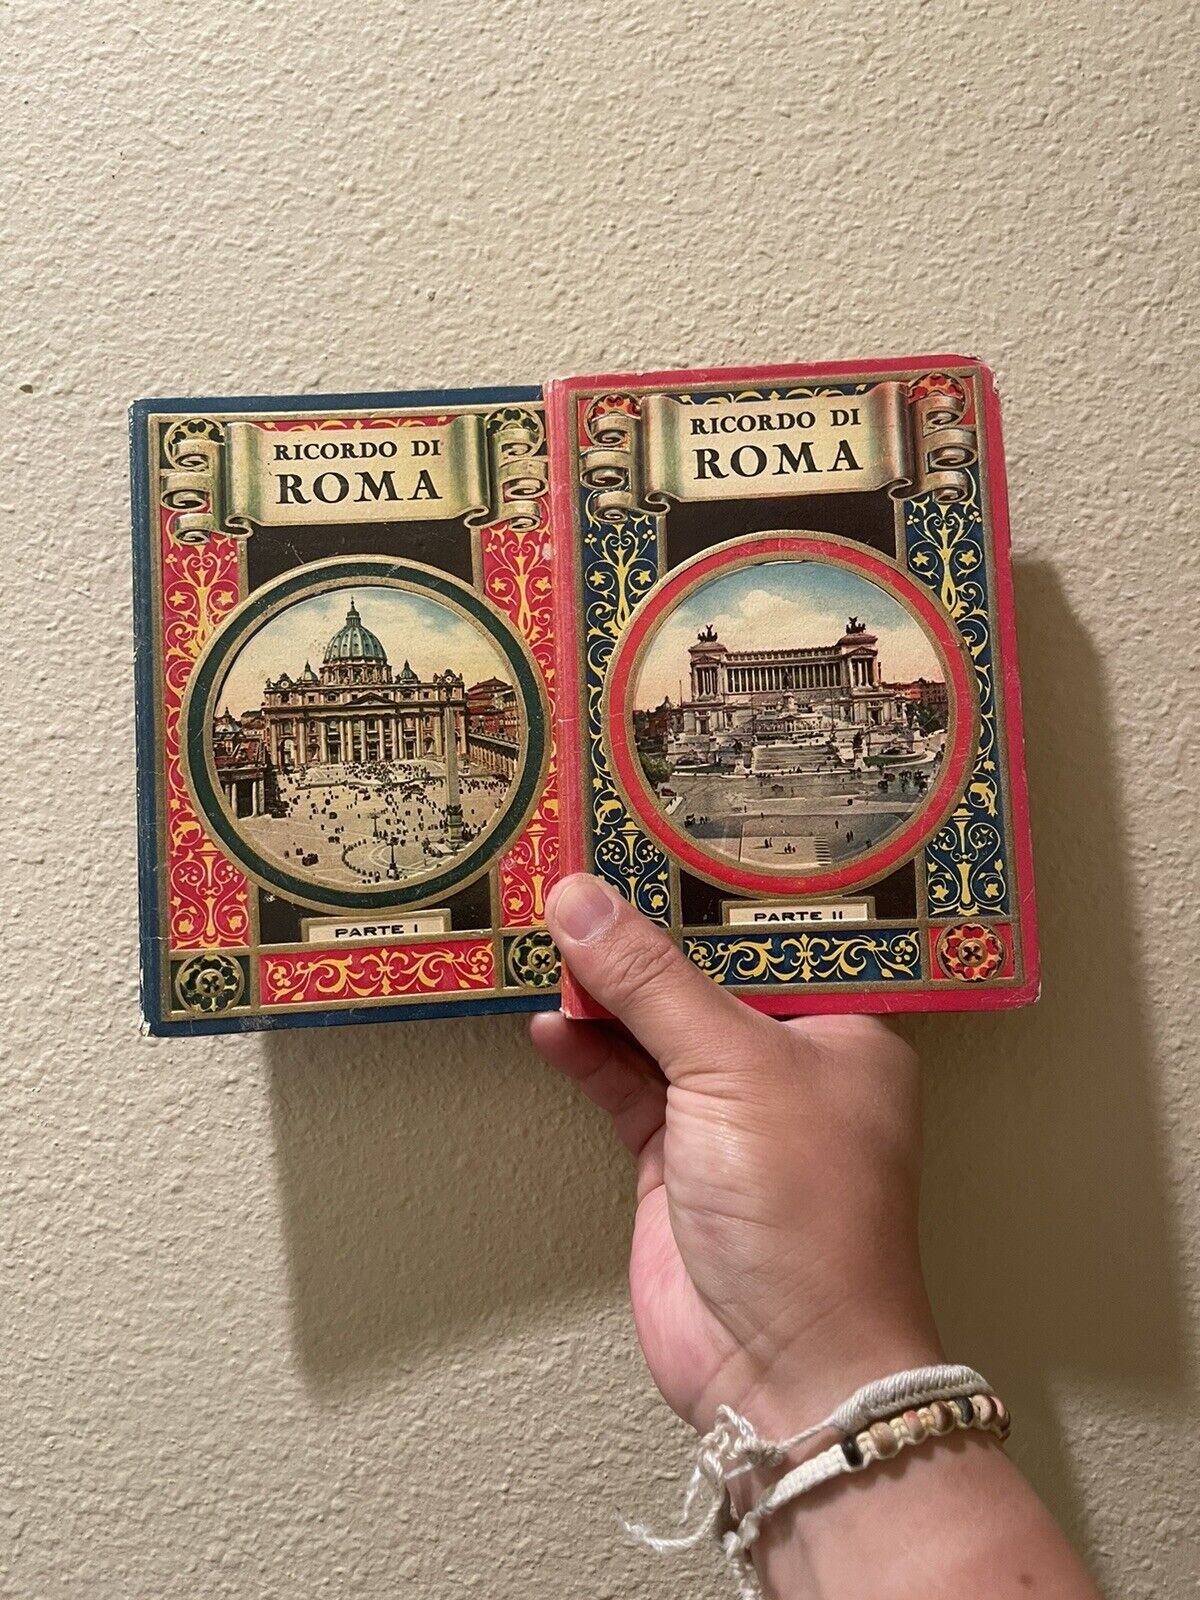 Ricordo Di Roma Parte I & II Antique Souvenir Photo Books 4 Languages Rome Italy